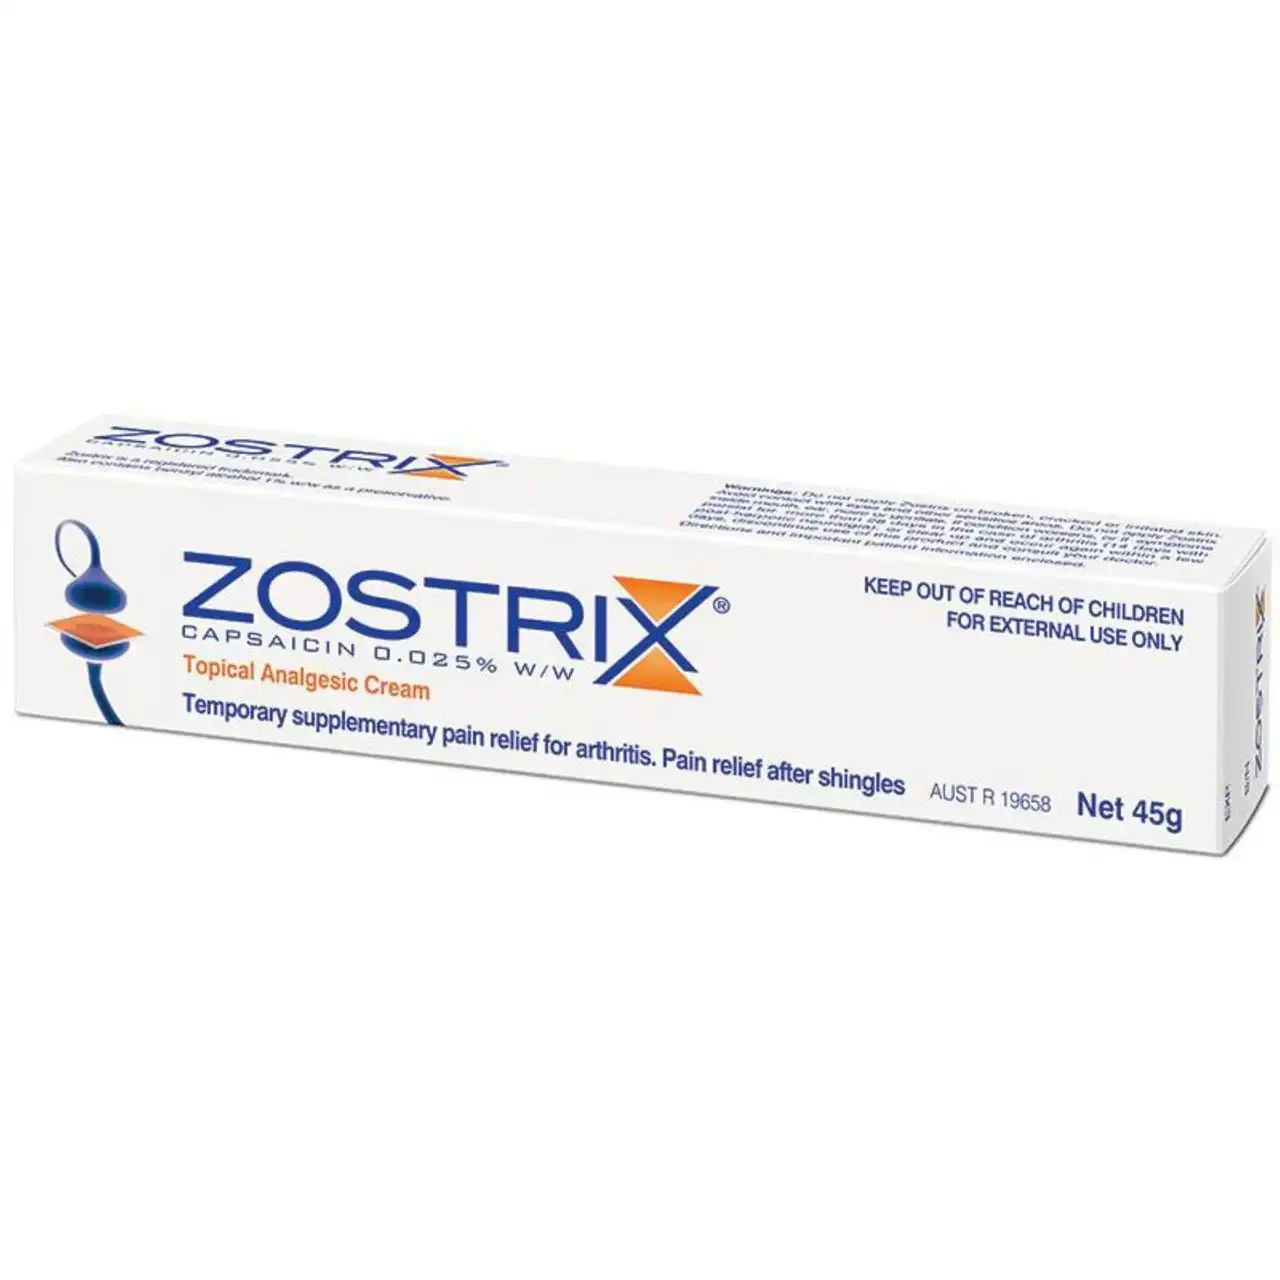 ZOSTRIX capsaicin 0.025%w/w cream tube 45g